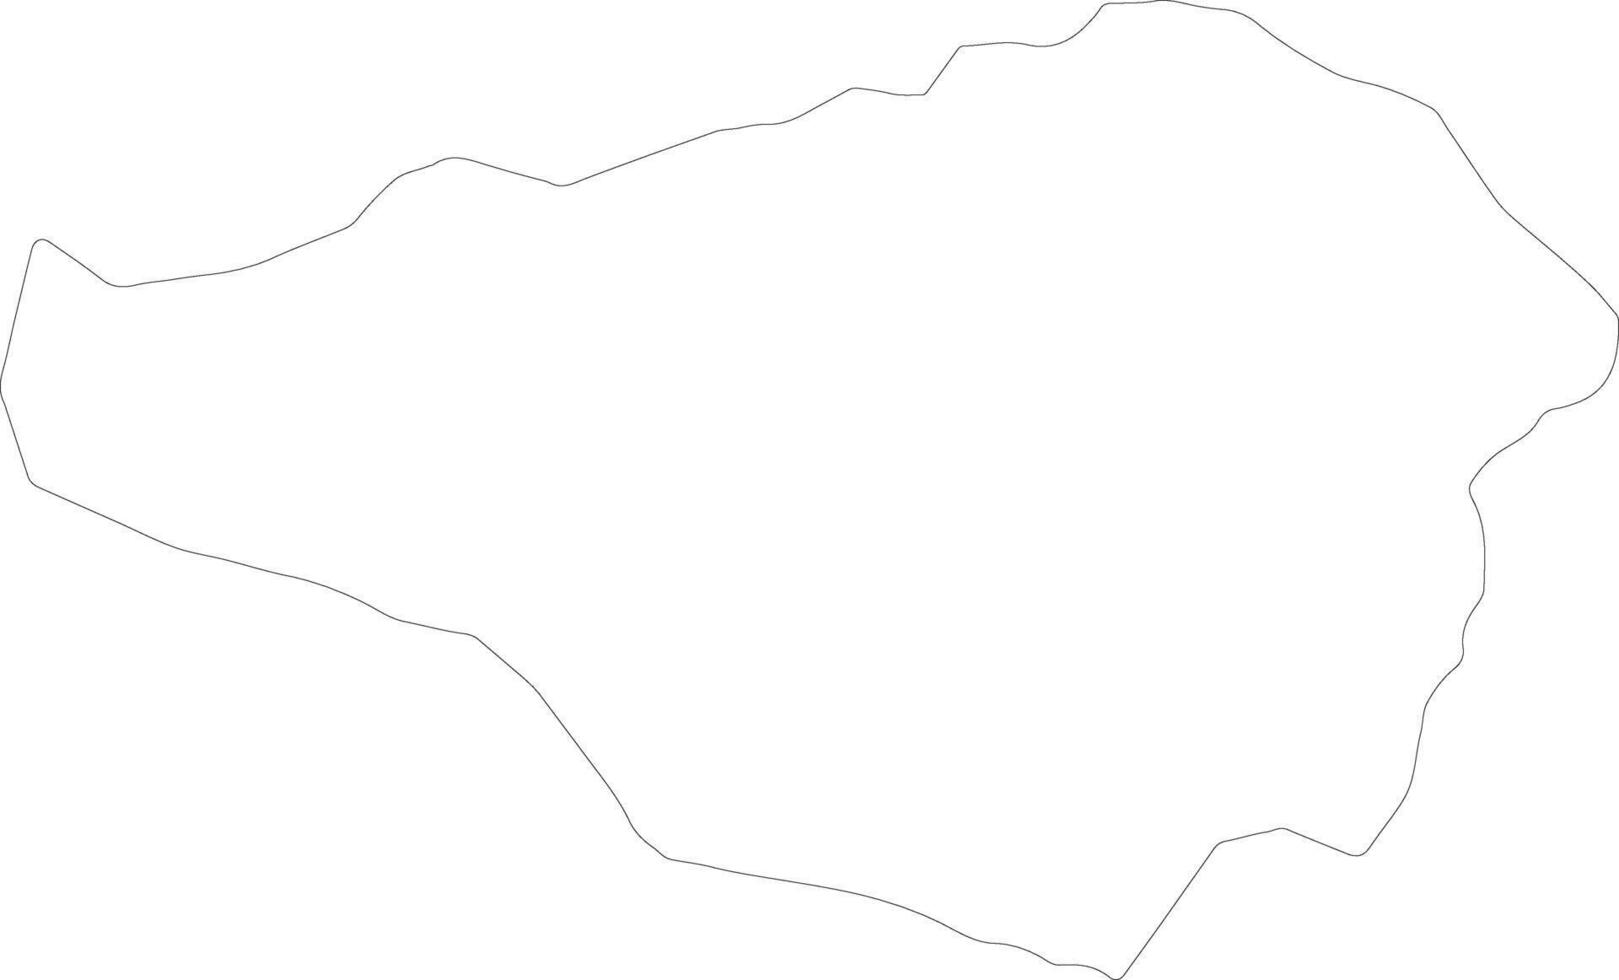 Kibale Uganda outline map vector